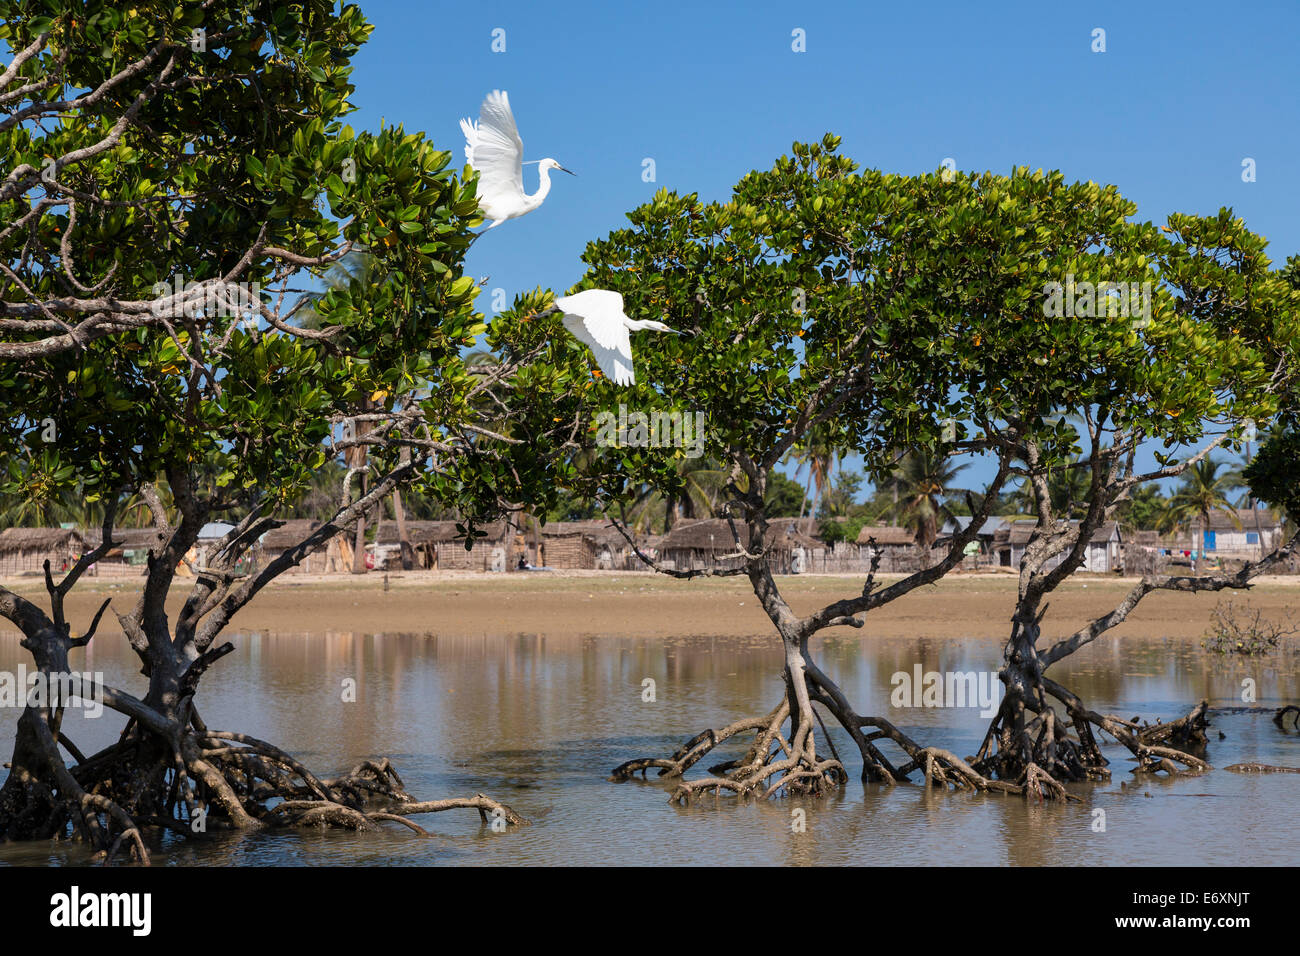 Little Egrets, small herons in the mangroves of Morondava, Egretta garzetta dimorpha, Madagascar, Africa Stock Photo